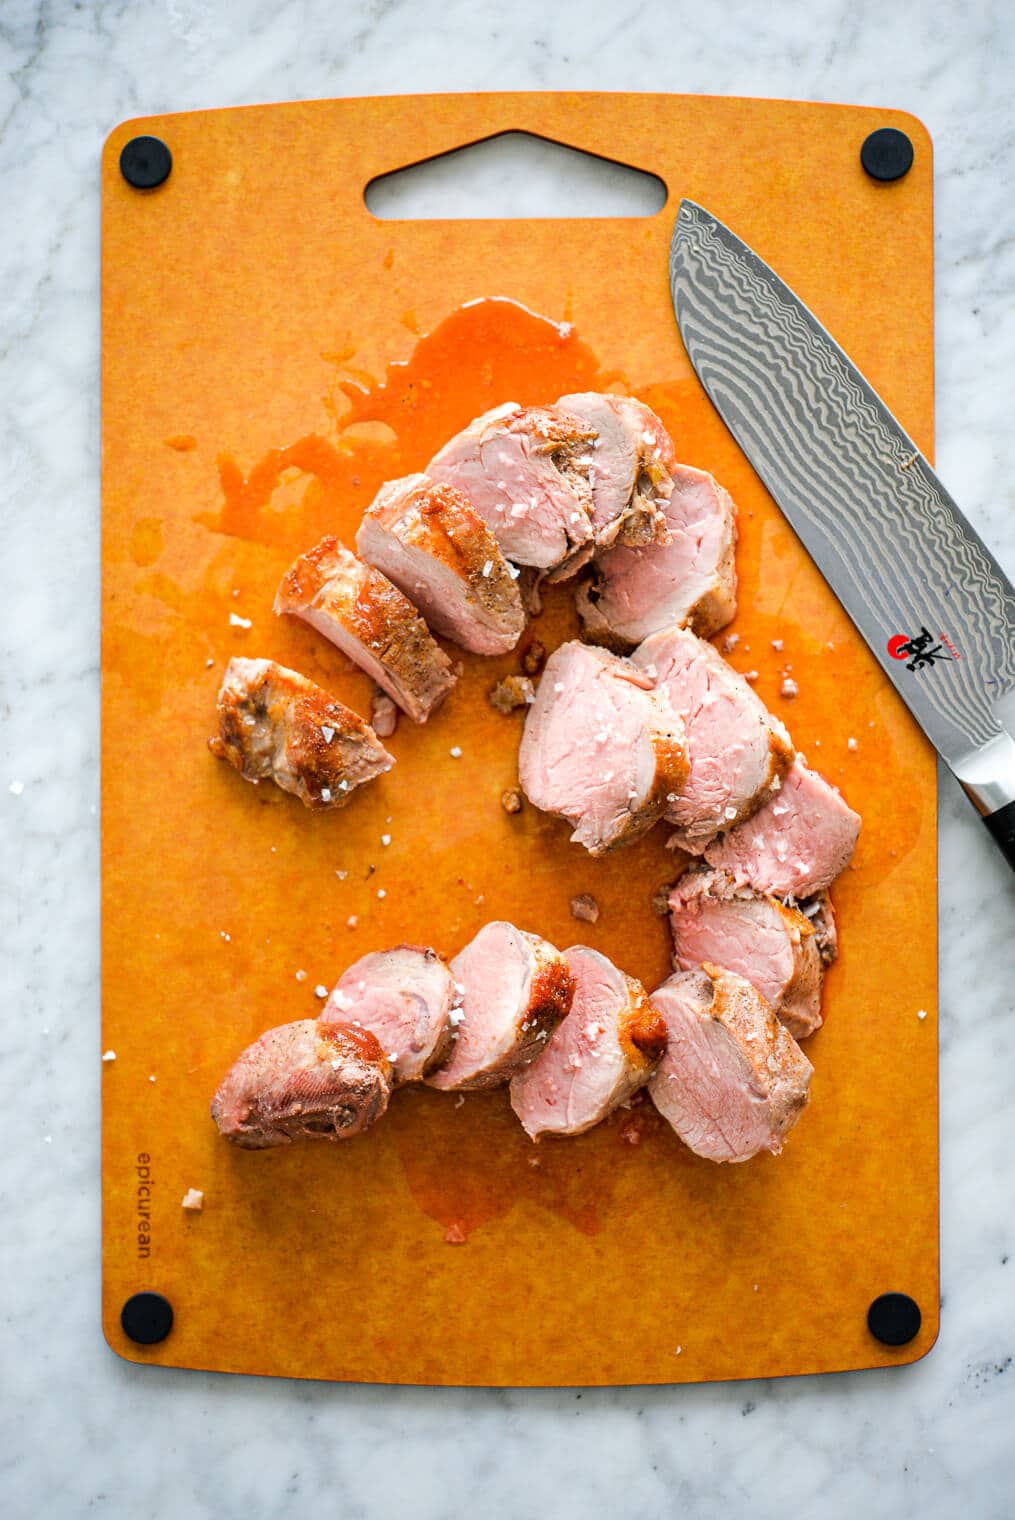 Pork tenderloin slices on a cutting board with butcher knife.